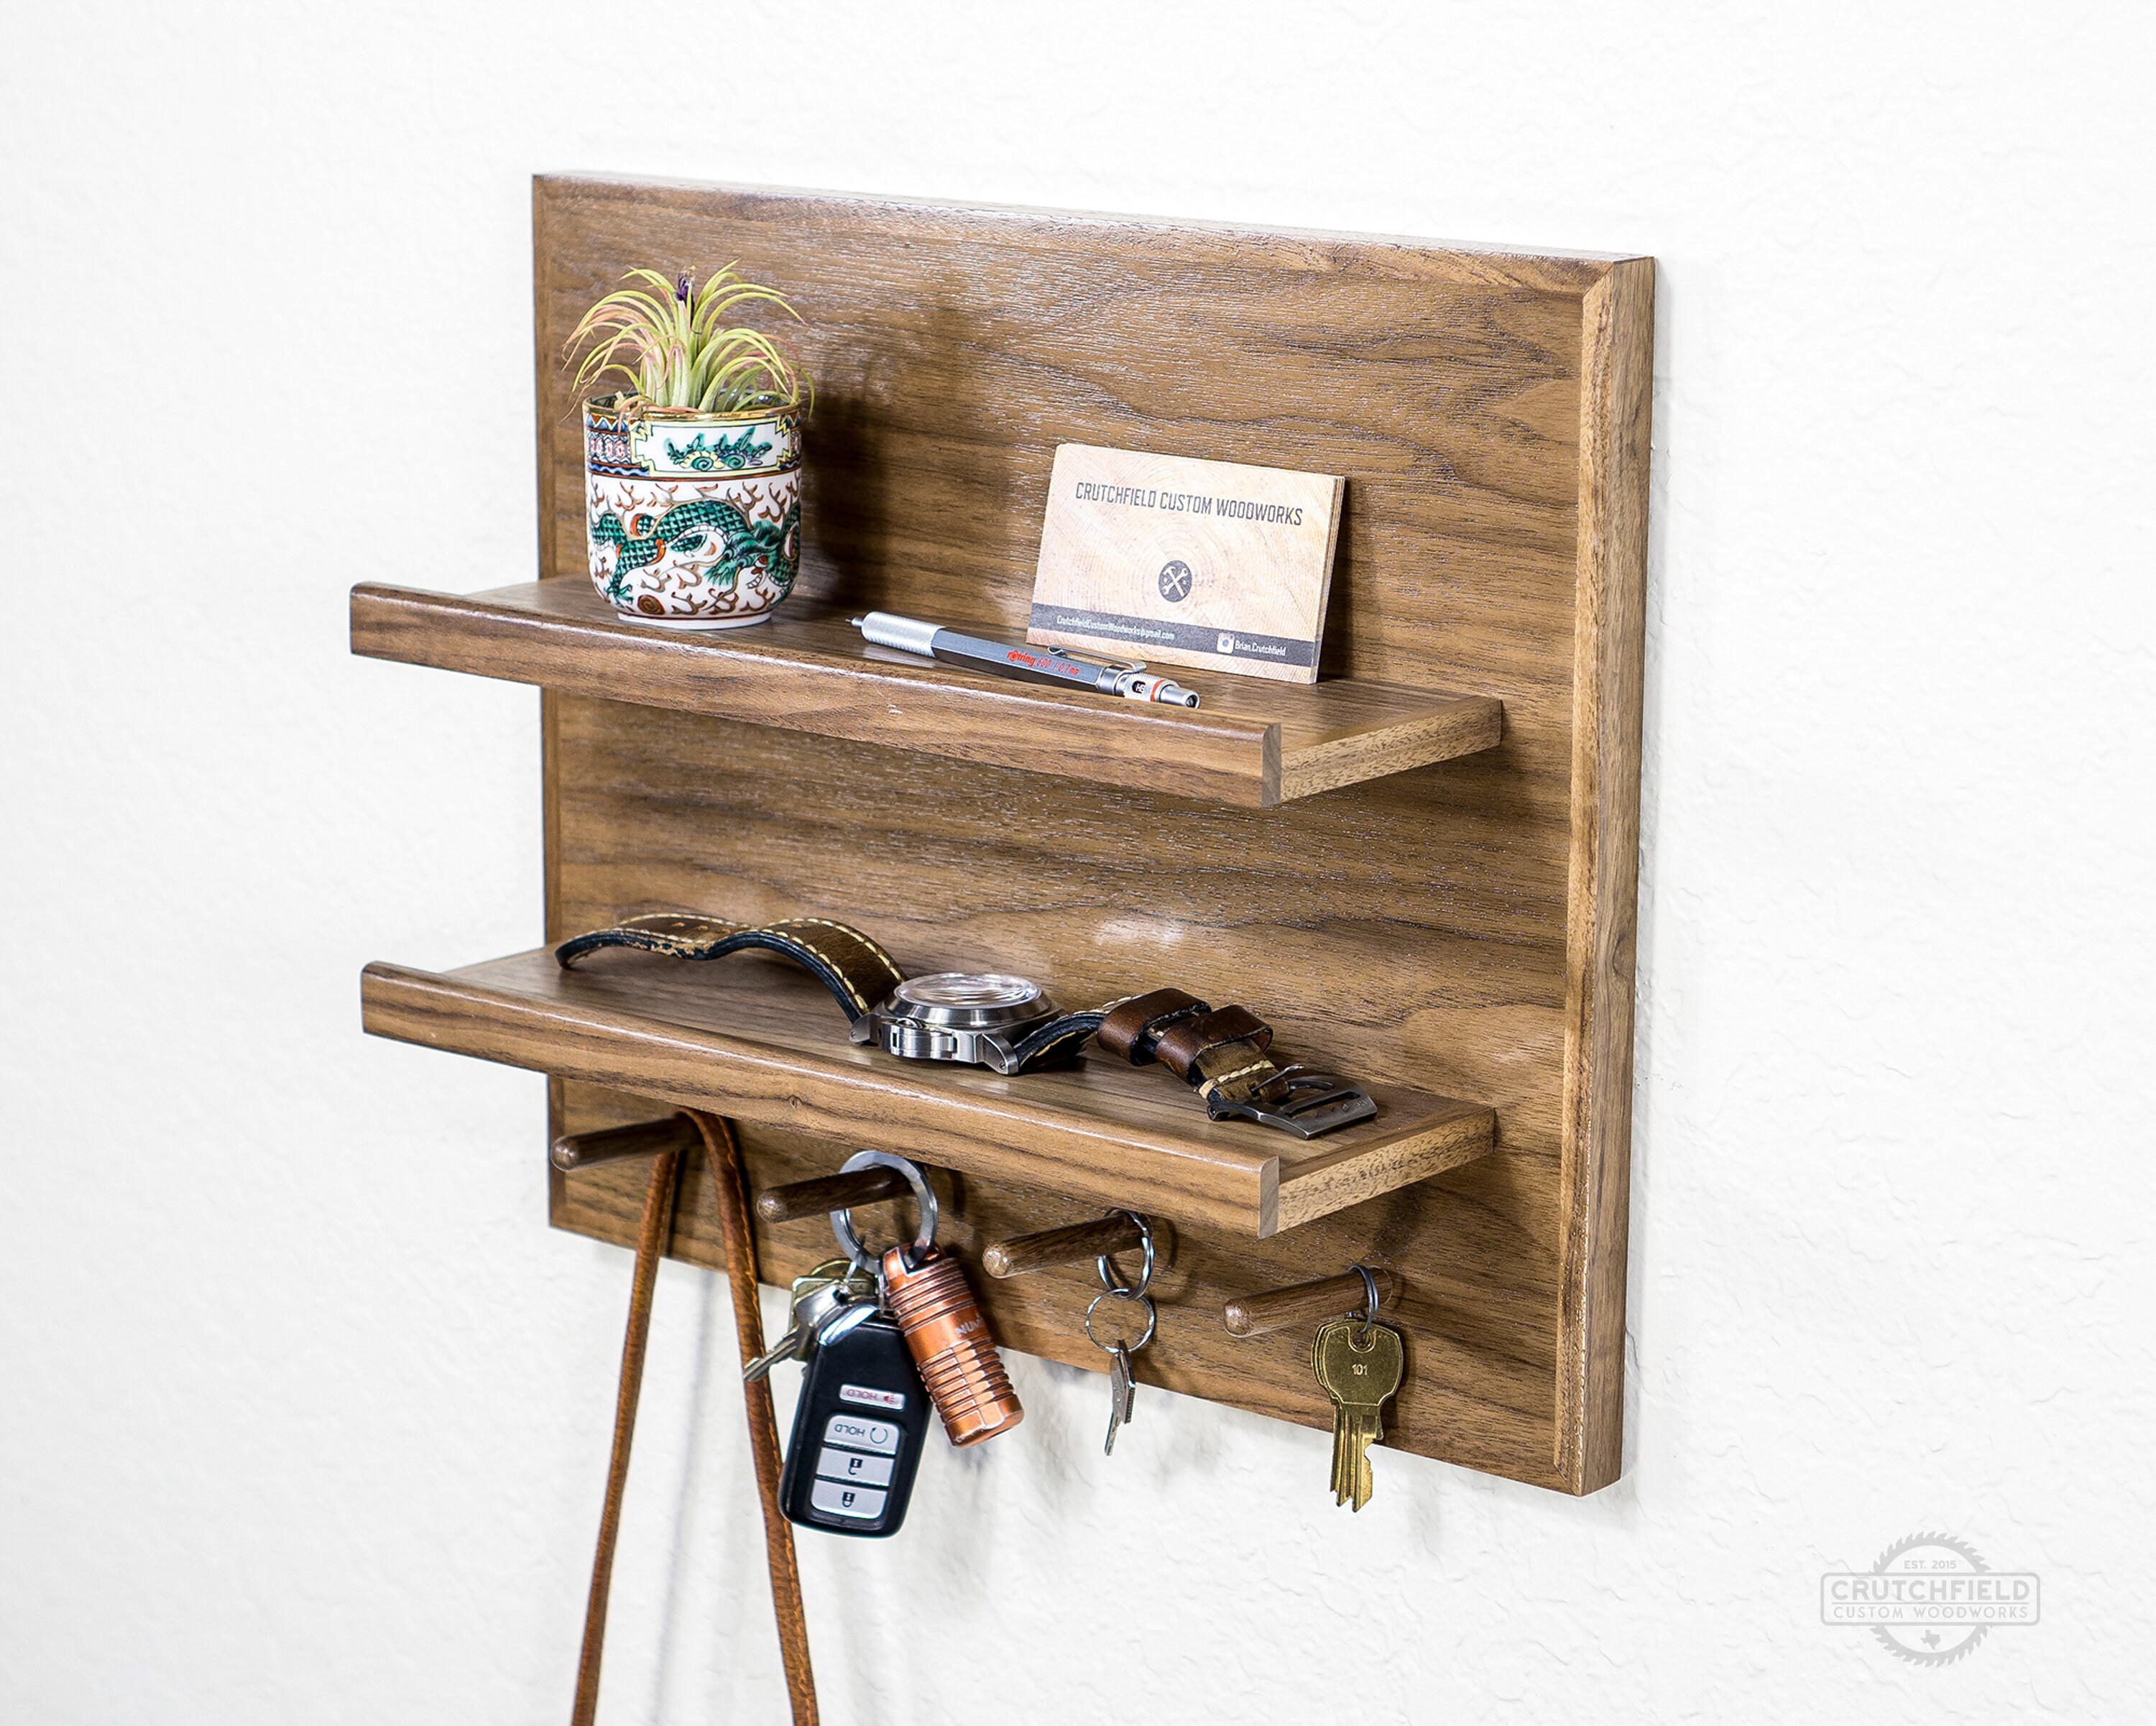 Small Size Modern Entryway Shelf Organizer in Walnut and Maple Wood 14 x 12 